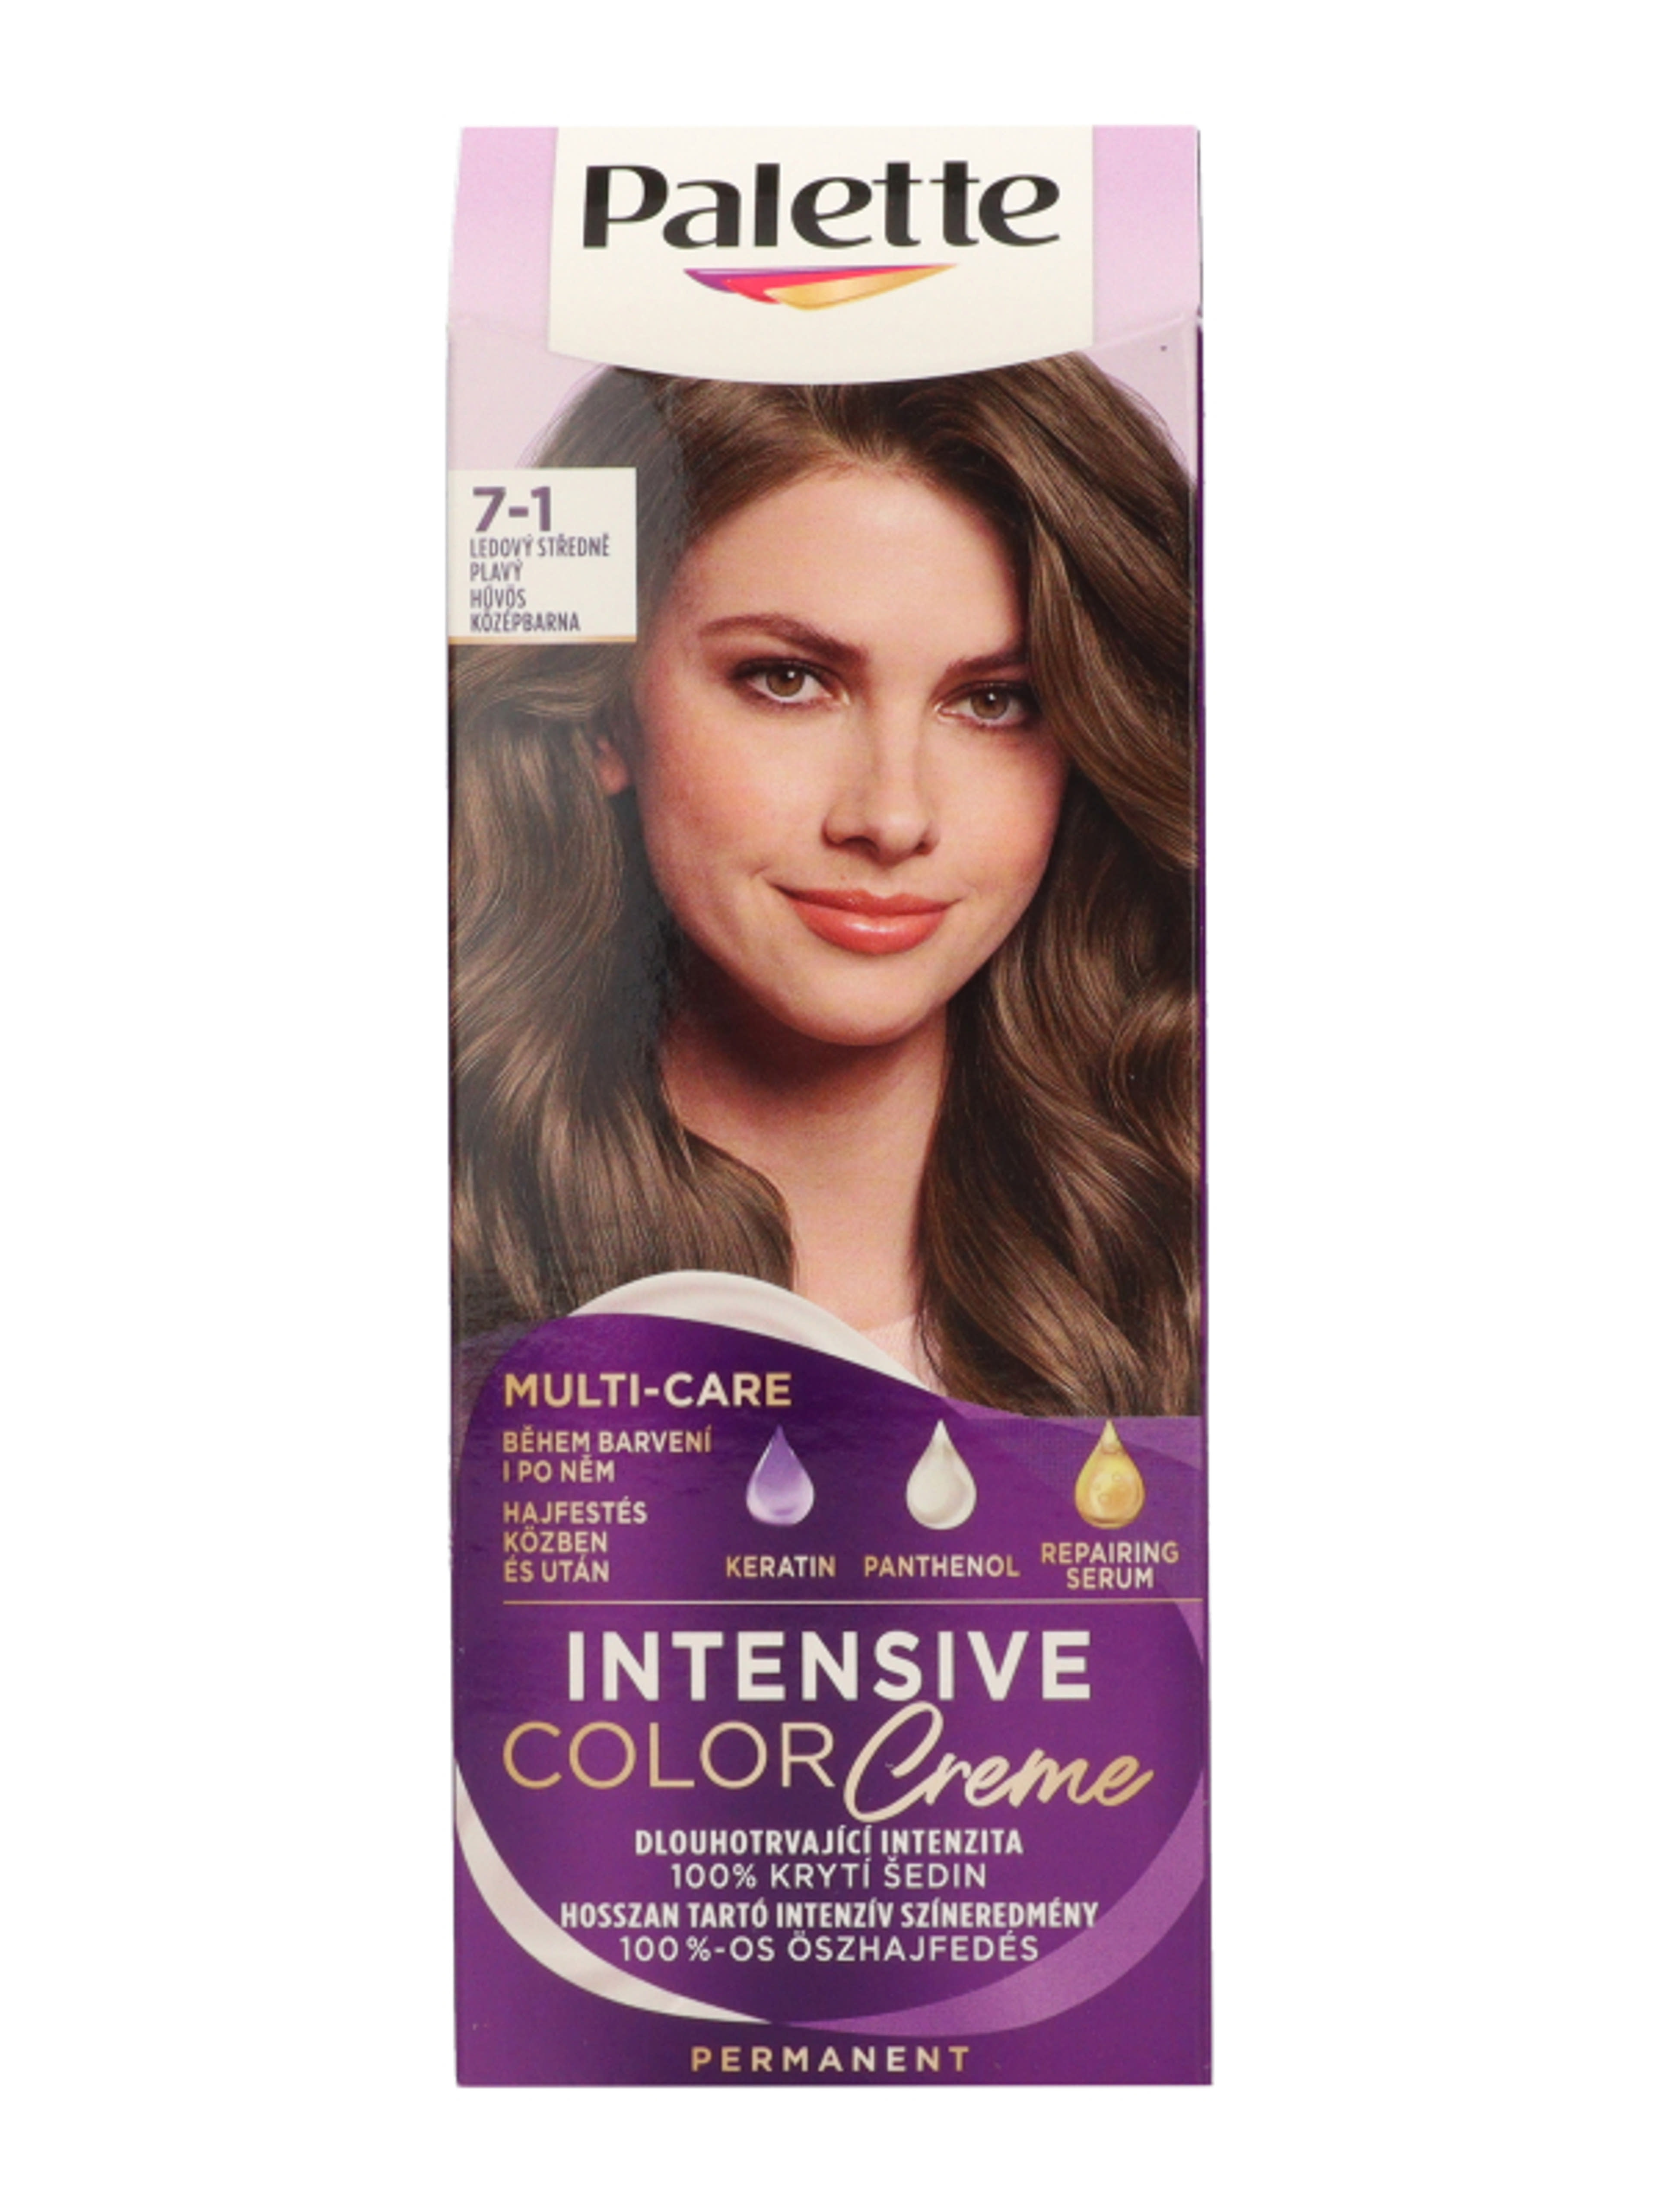 Palette Intensive Color Creme hajfesték 7-1 hamvas középbarna - 1 db-4